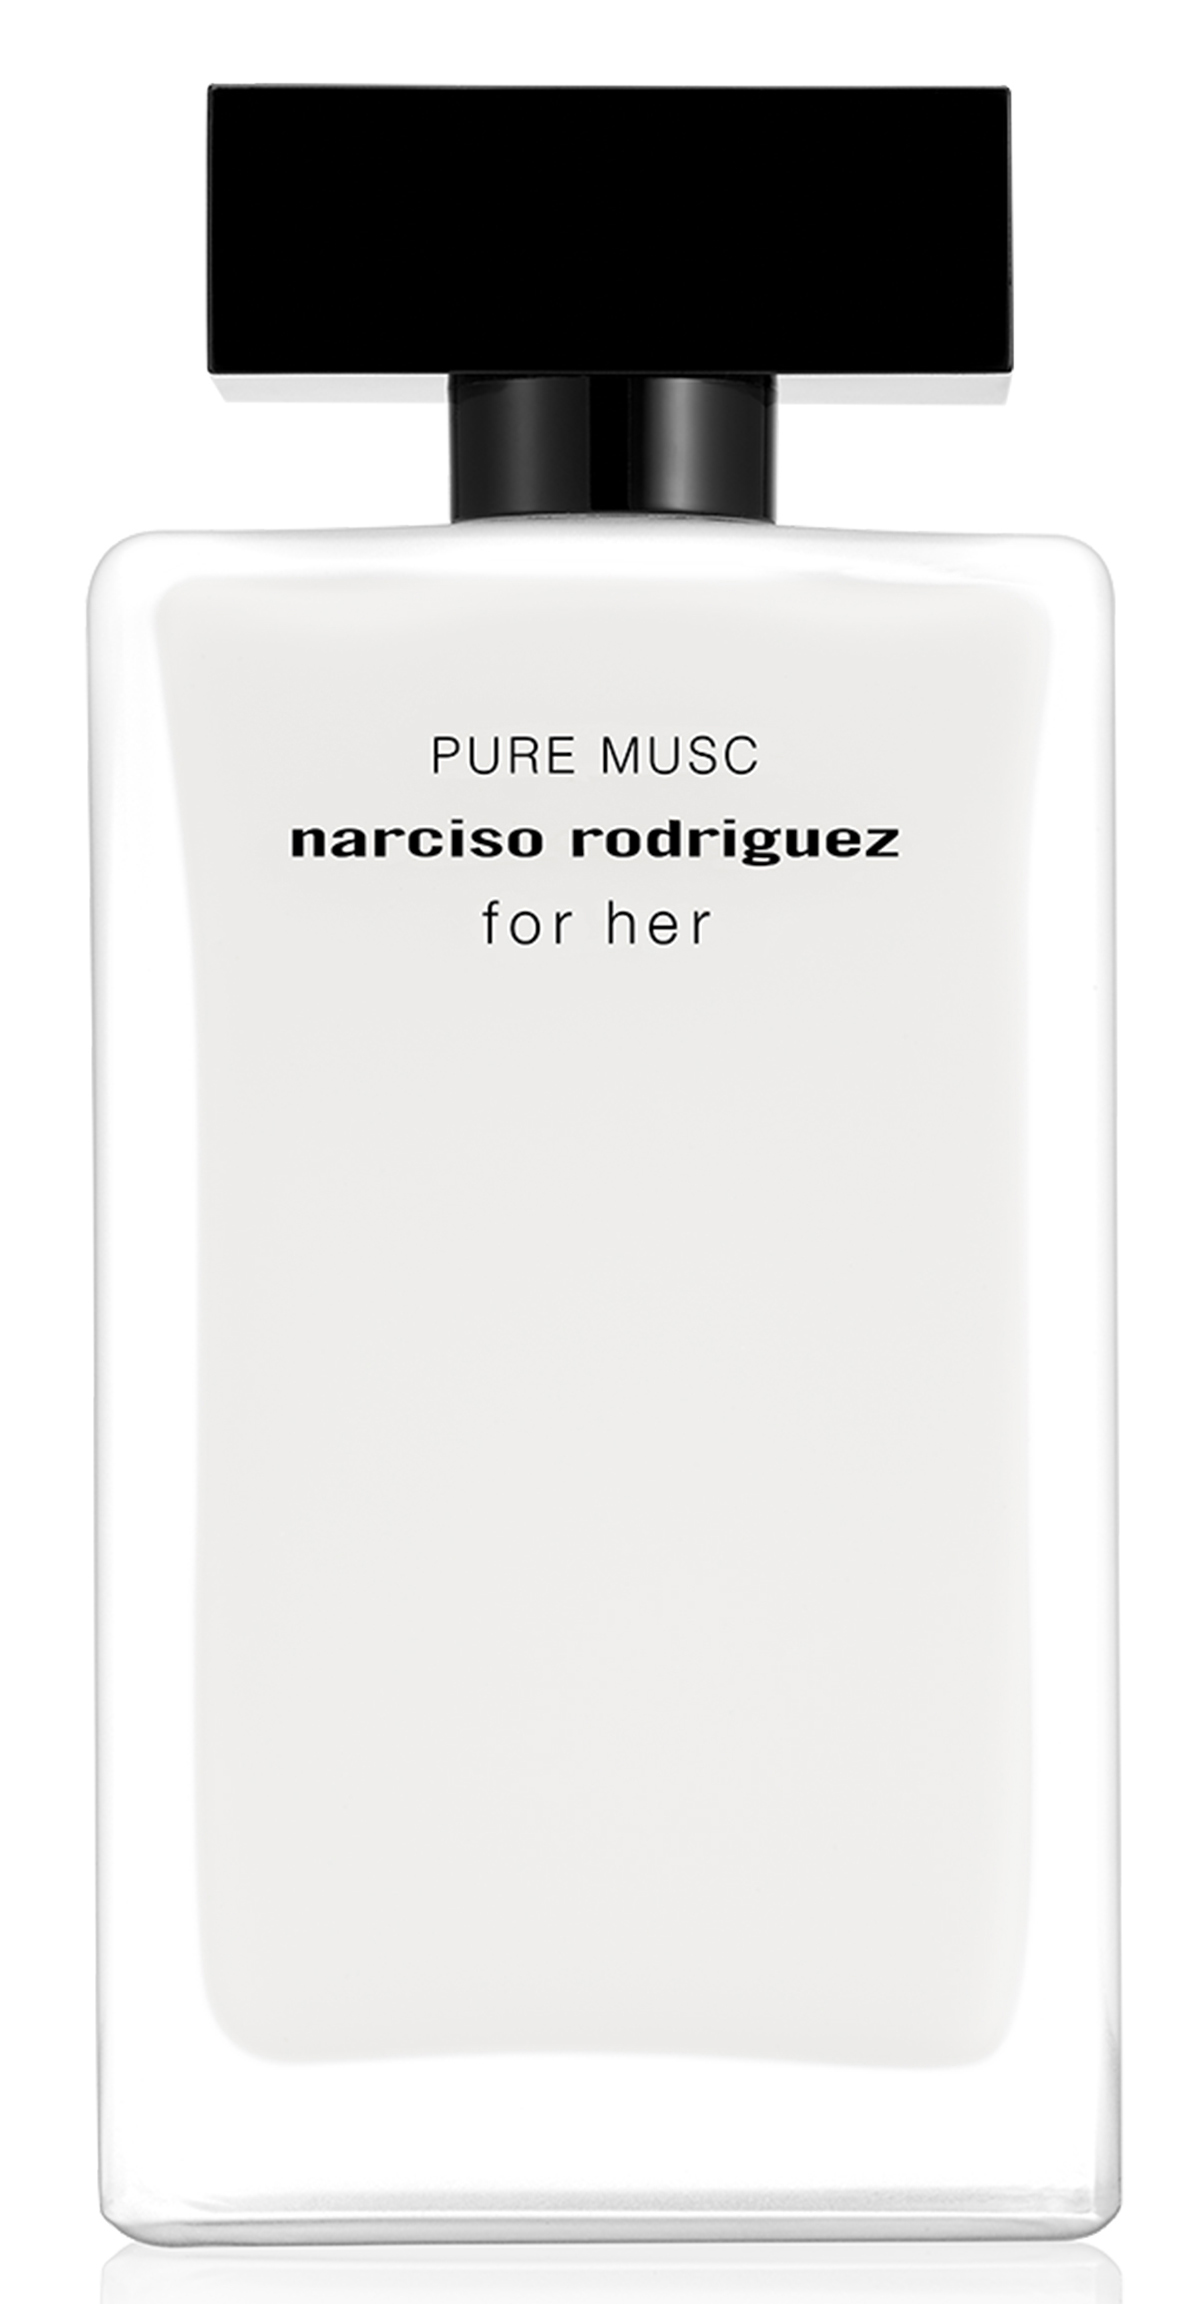 Аромат narciso rodriguez. Narciso Rodriguez Pure Musc for her 100 ml. Narciso Rodriguez Pure Musc,100 мл. Pure Musk Narciso Rodriguez for her. Нарциссо Родригес духи белые.